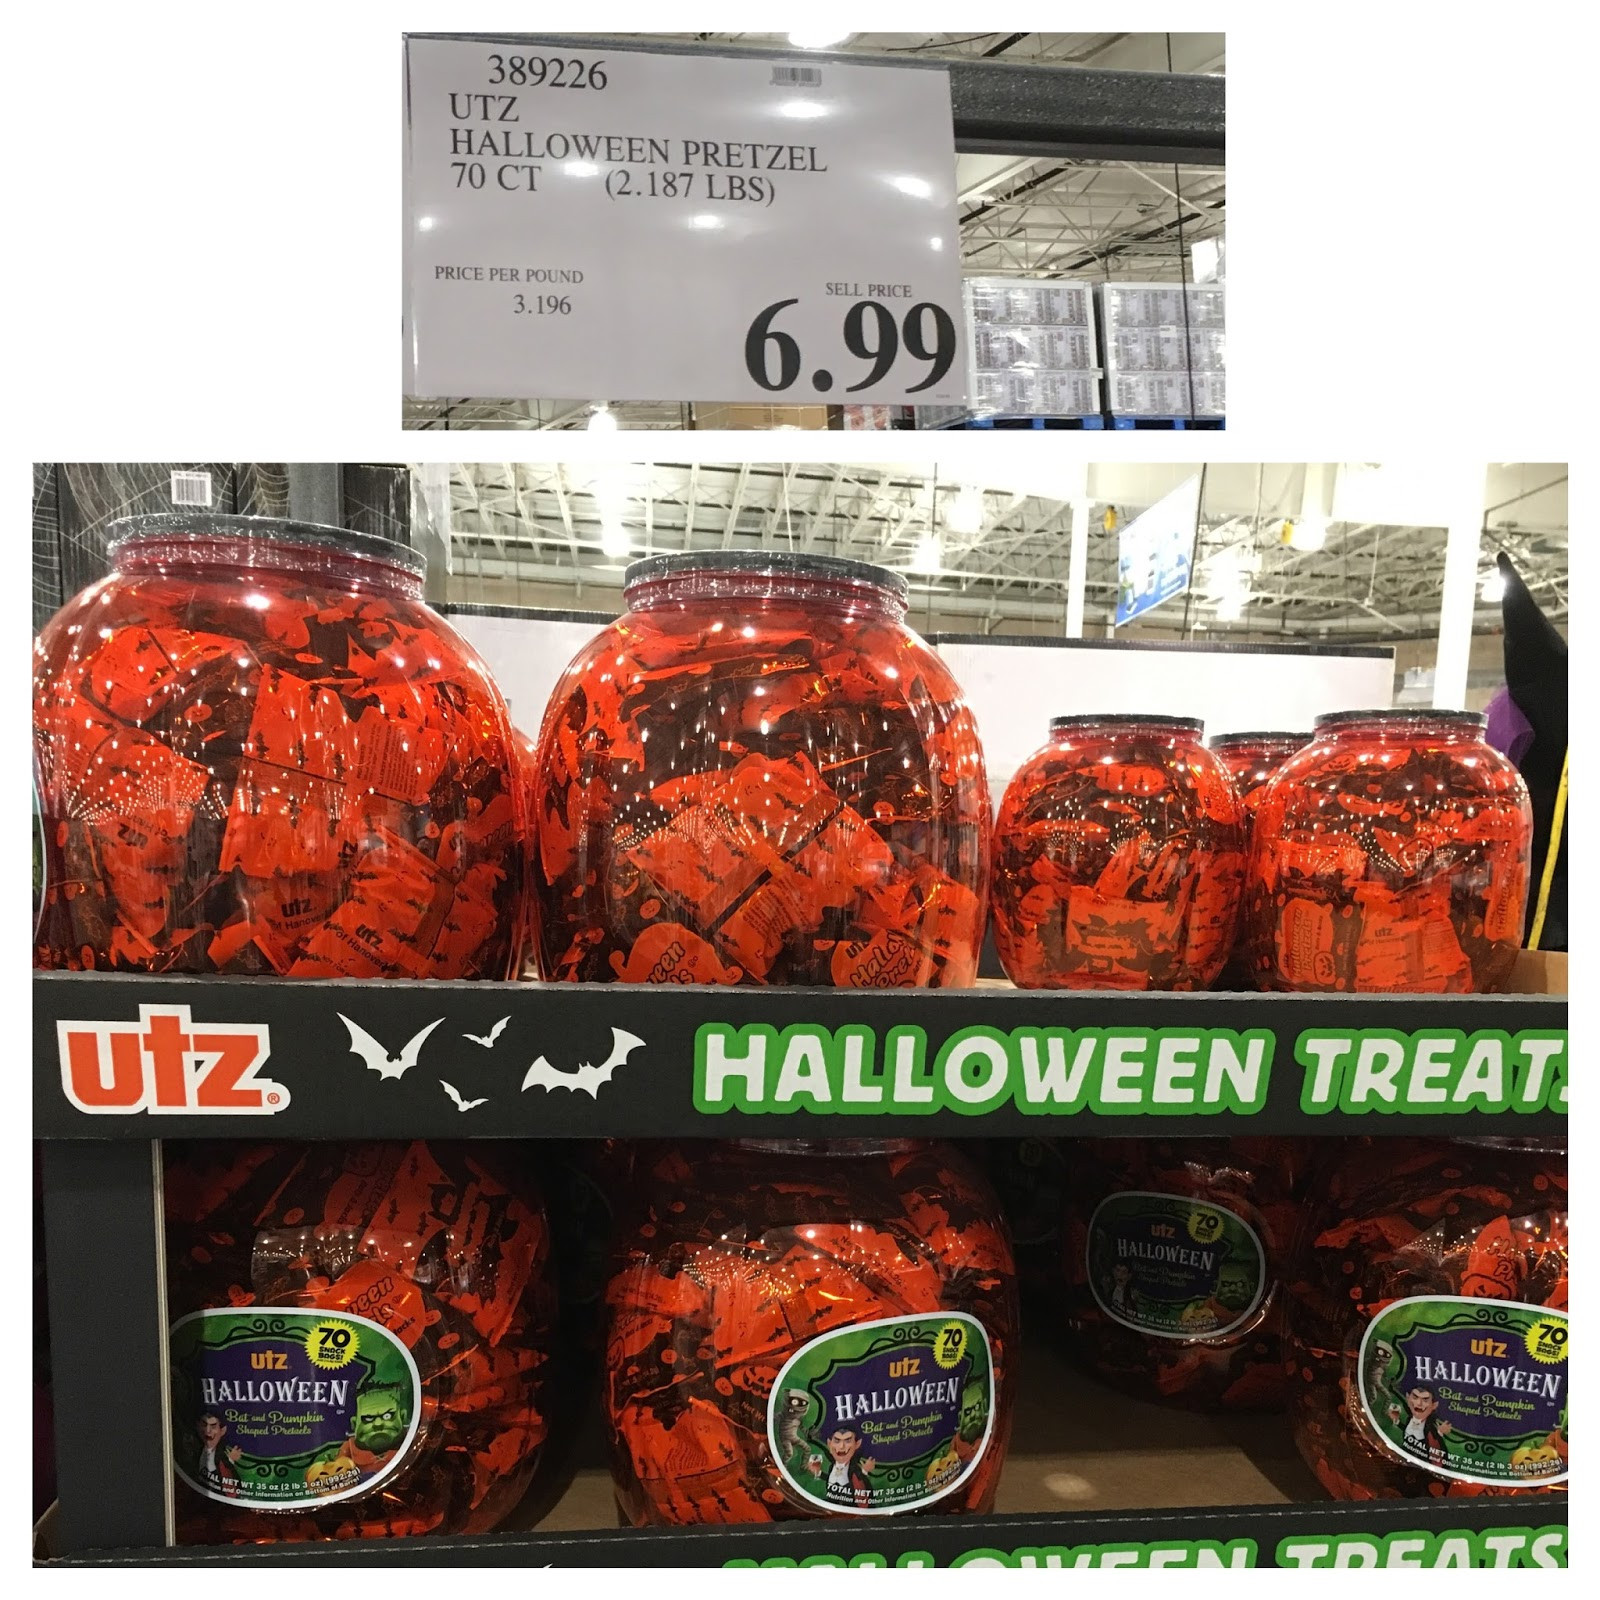 Utz Halloween Pretzels
 the Costco Connoisseur September 2016